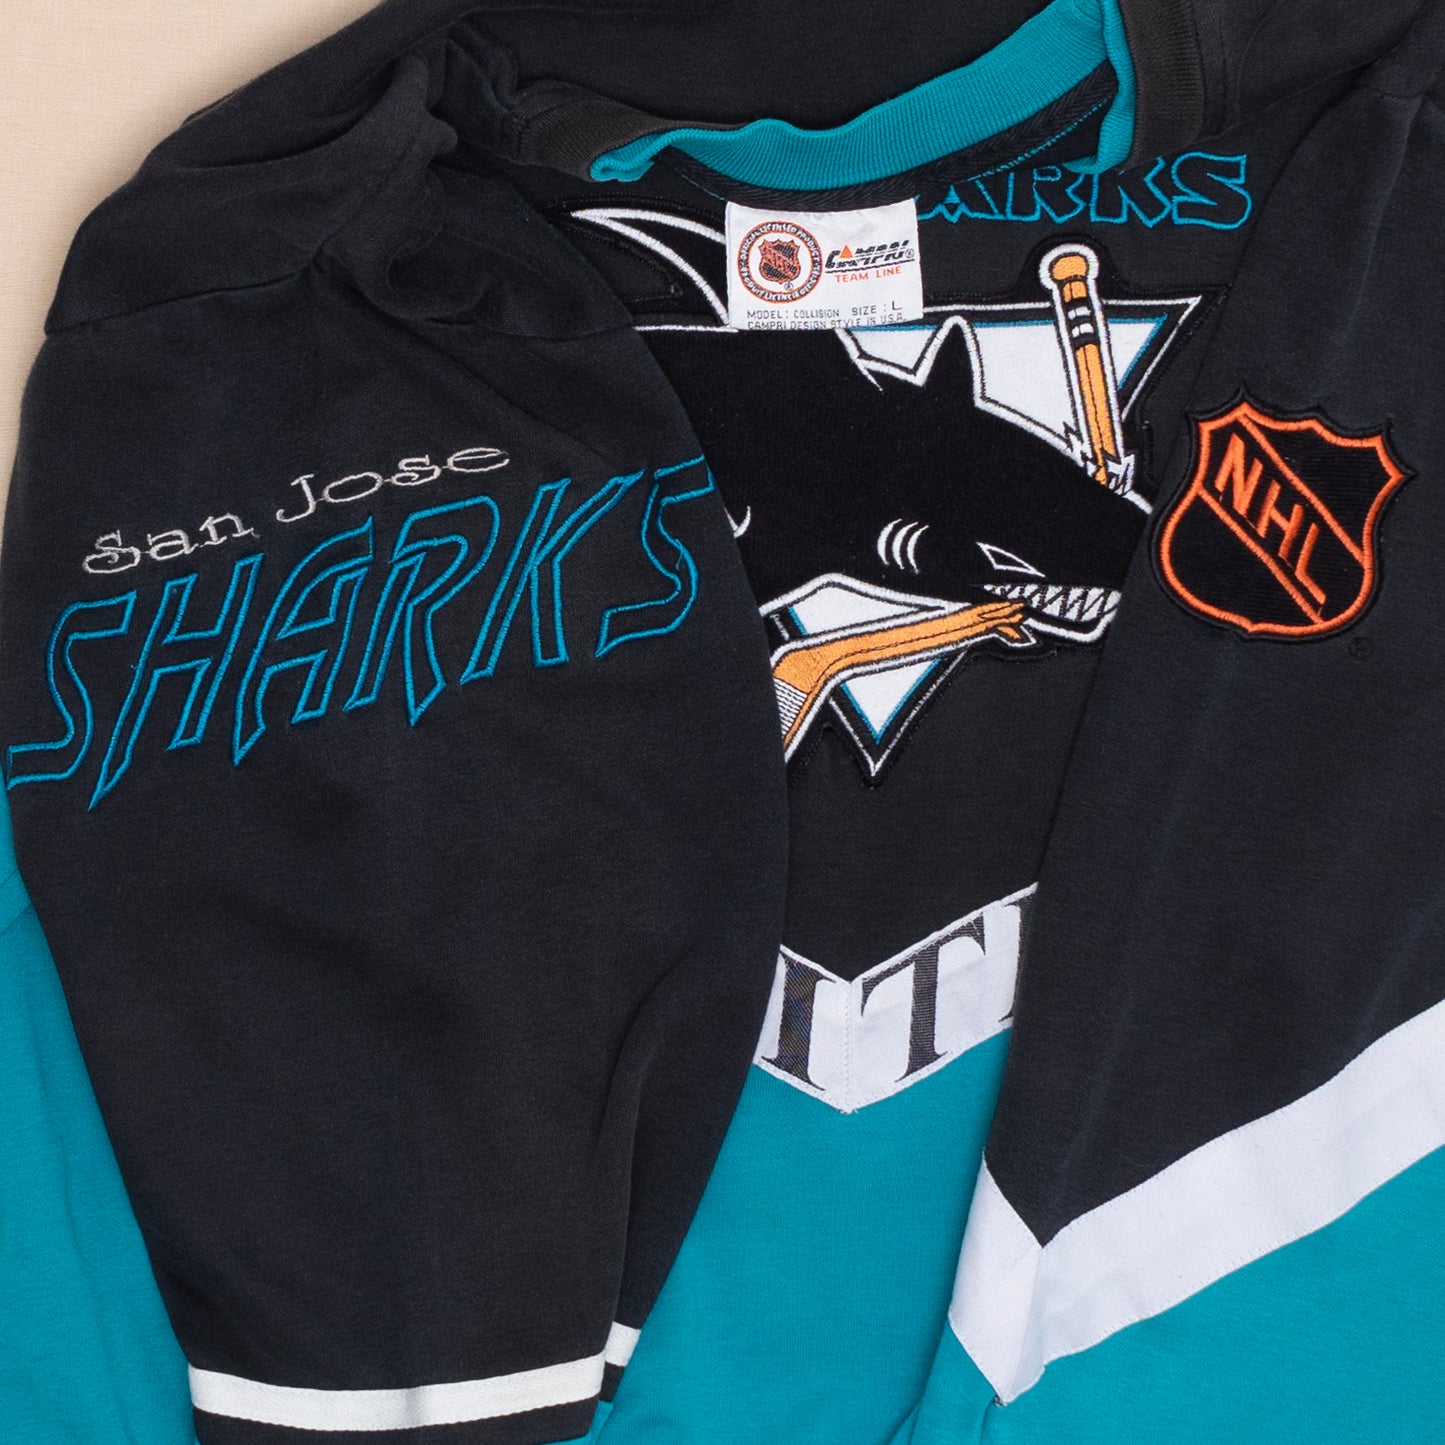 San Jose Sharks Sweater, L